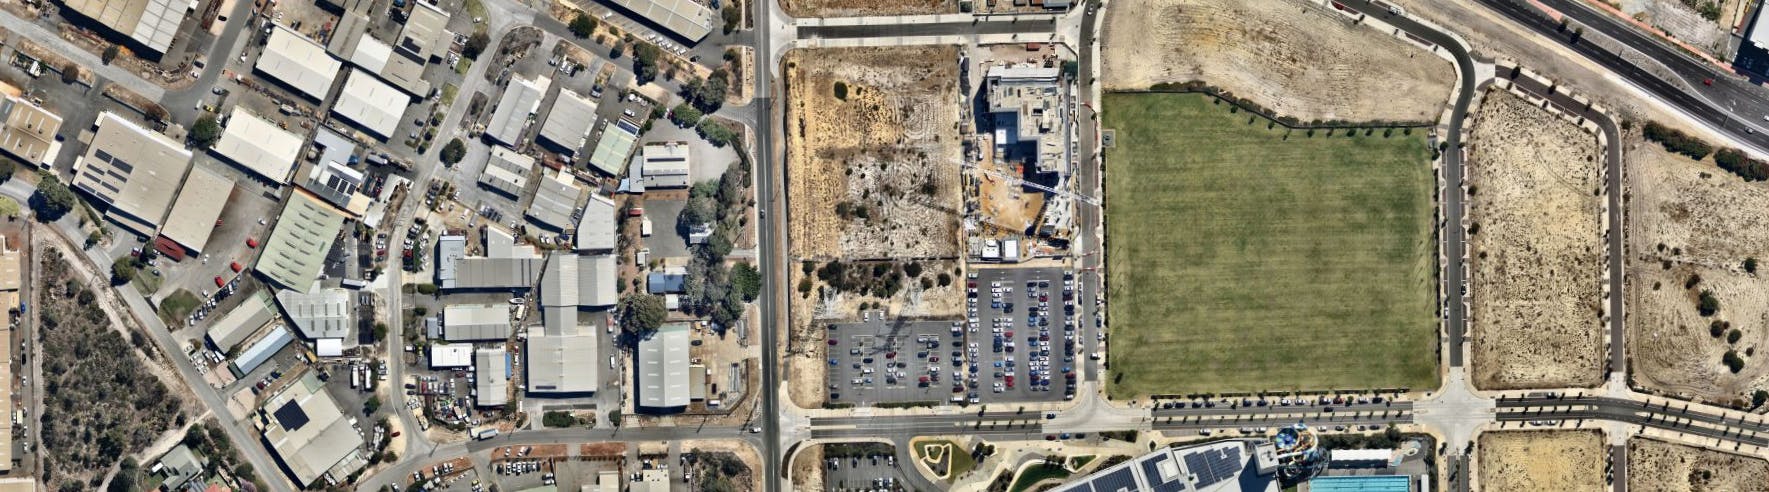 aerial photo of site